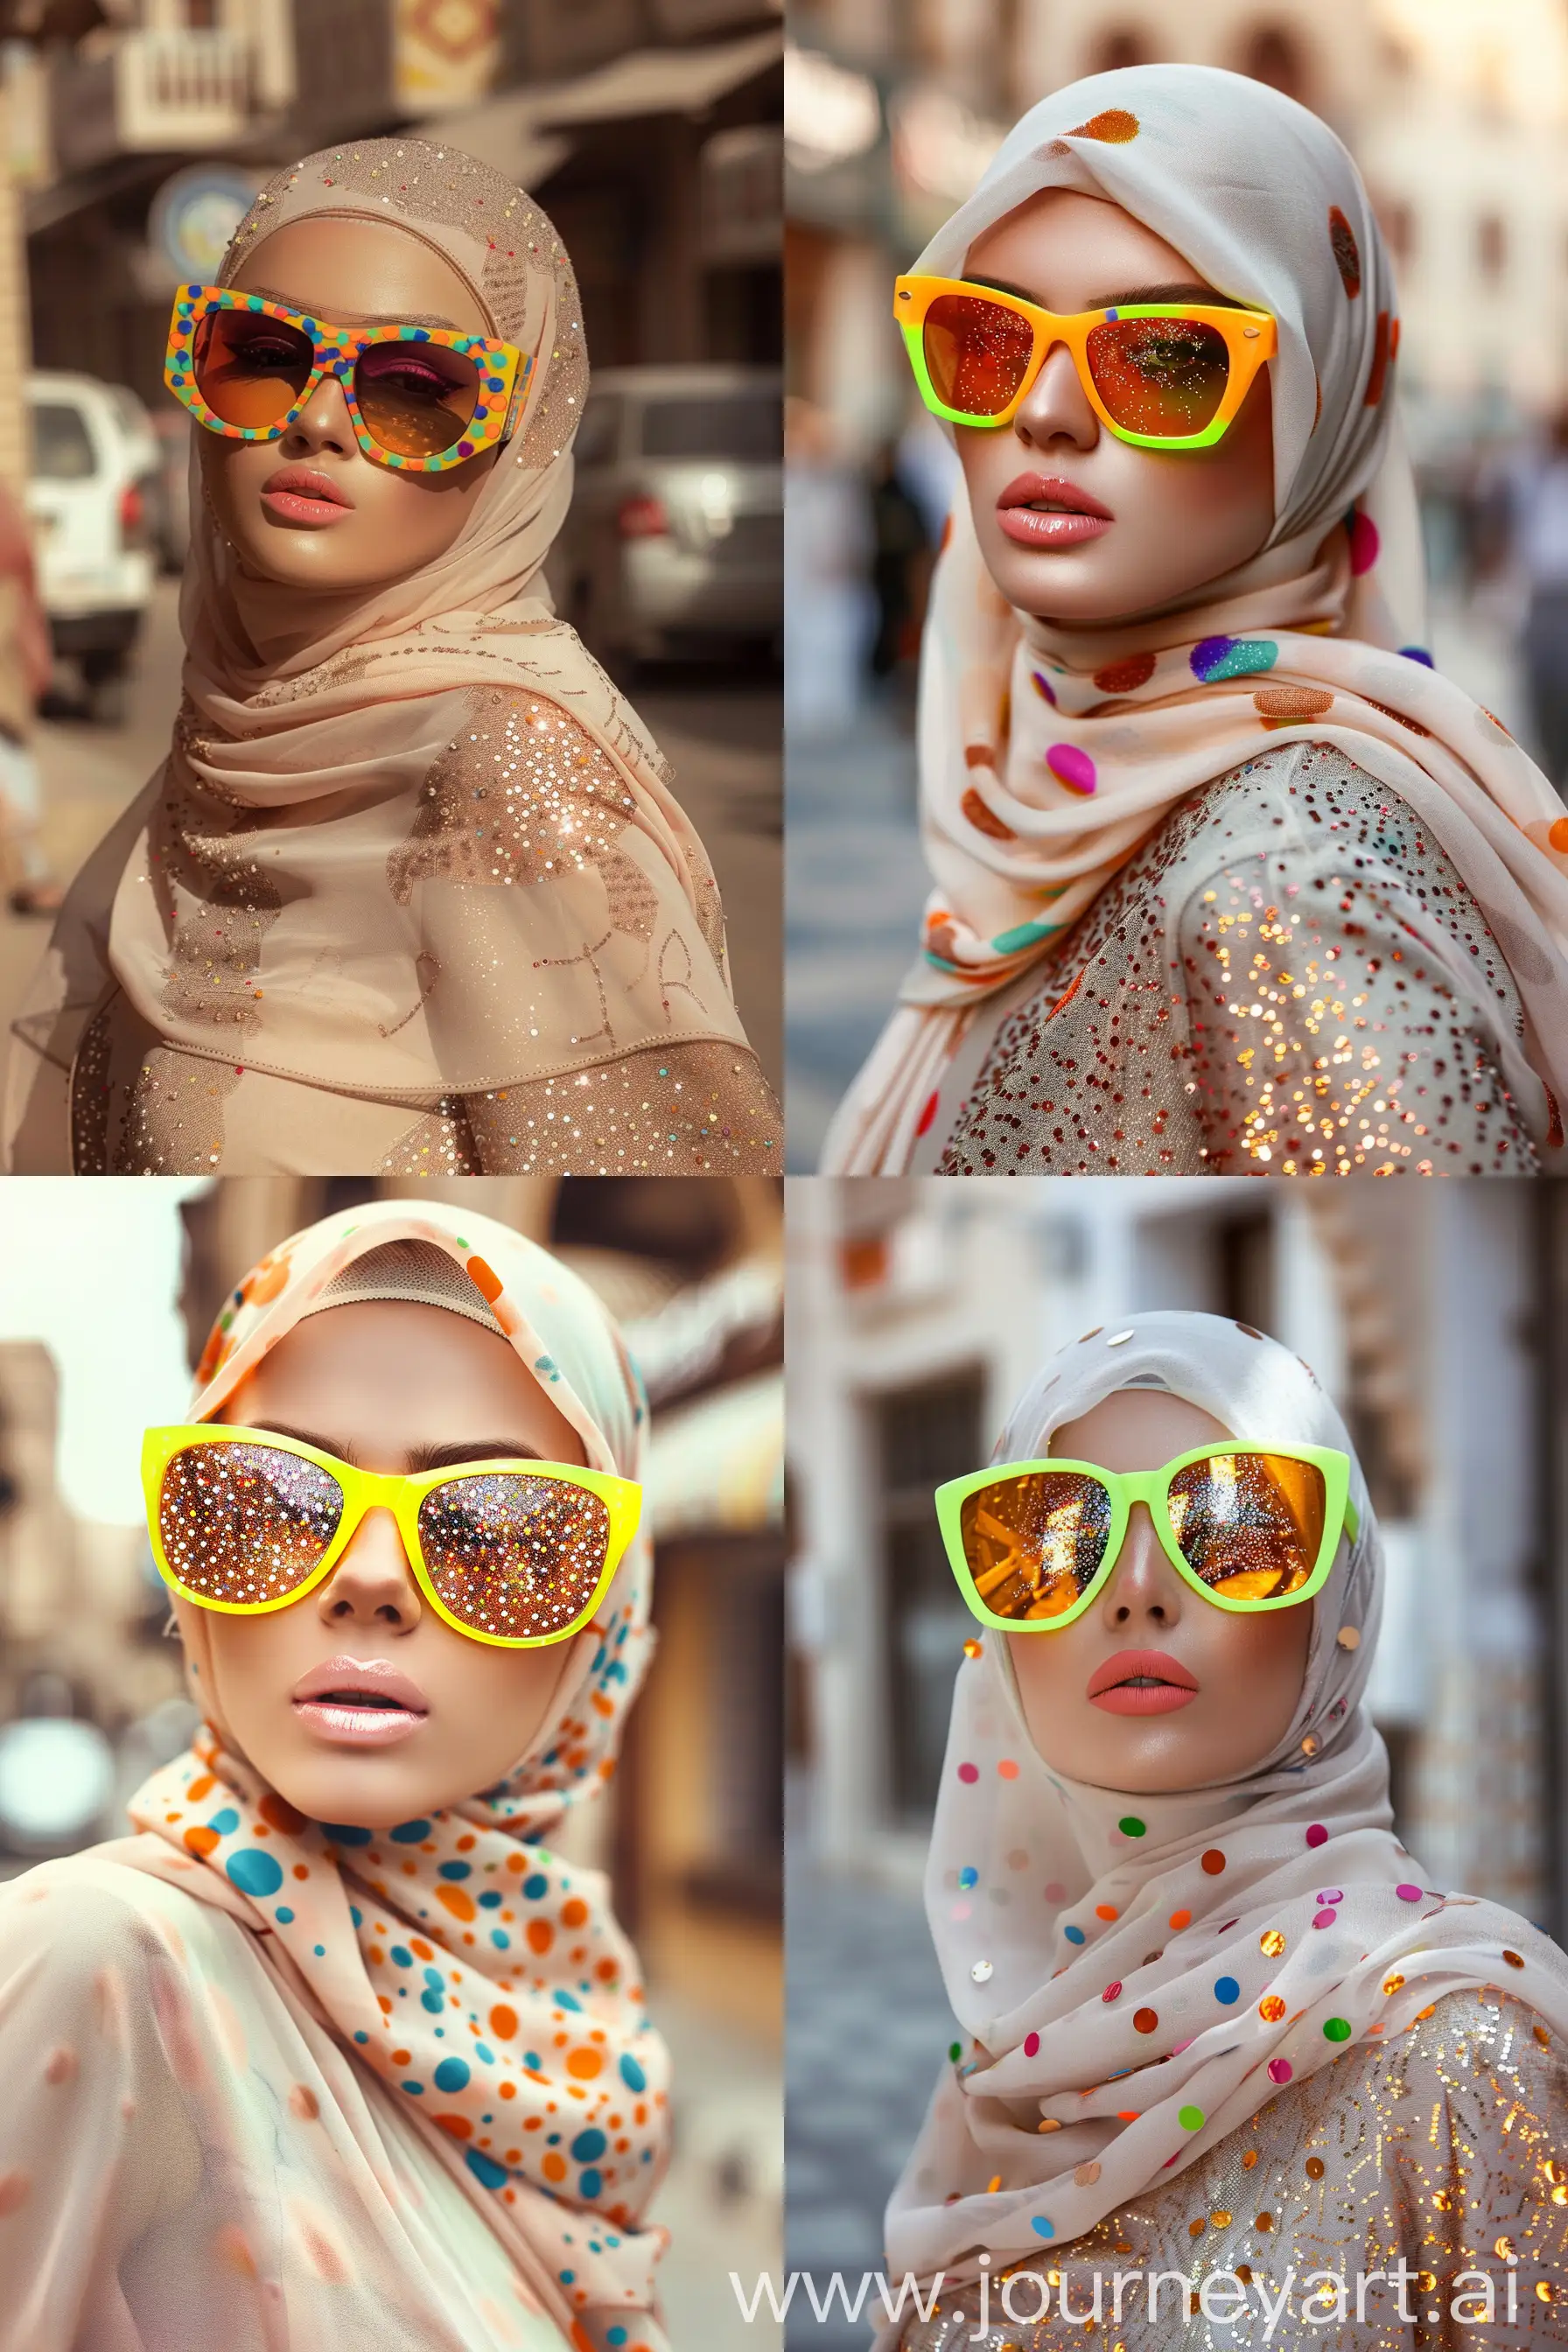 Stylish-Woman-in-Neon-Sunglasses-Walking-Through-Vibrant-Arabic-Streets